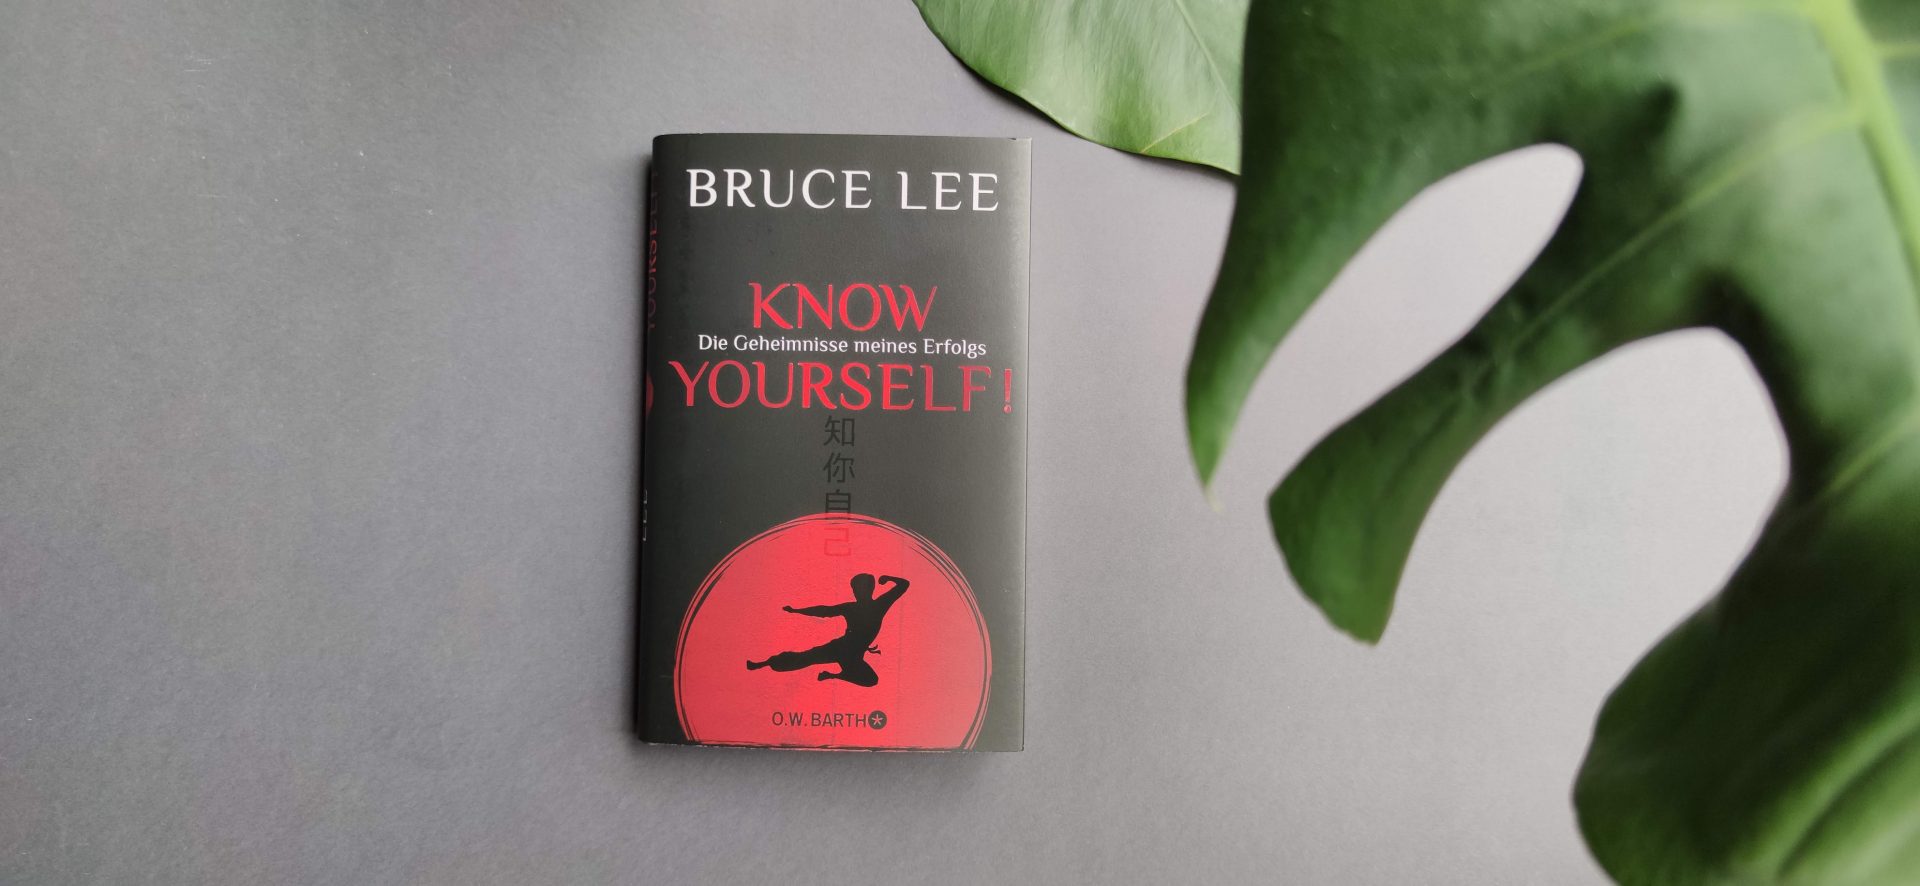 Bruce Lee Buch Know yourself! Die Geheimnisse meines Erfolgs